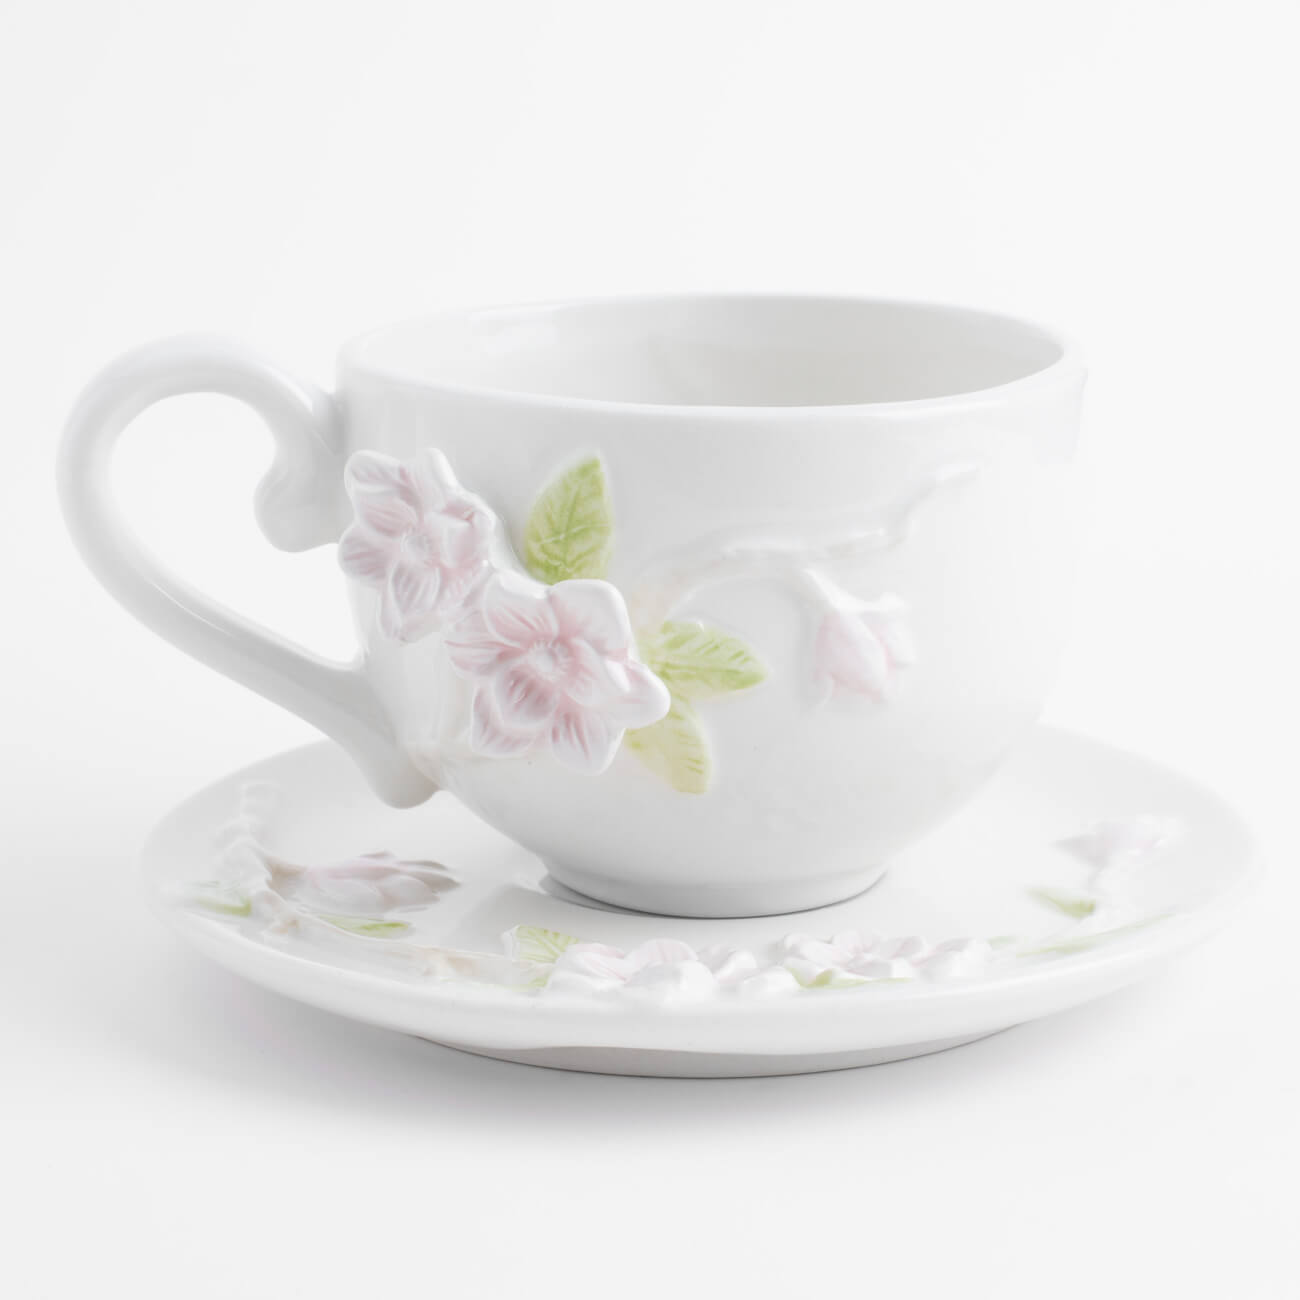 Пара чайная для завтрака, 1 перс, 2 пр, 420 мл, керамика, молочная, Цветы магнолии, Magnolia чайная пара nouvelle